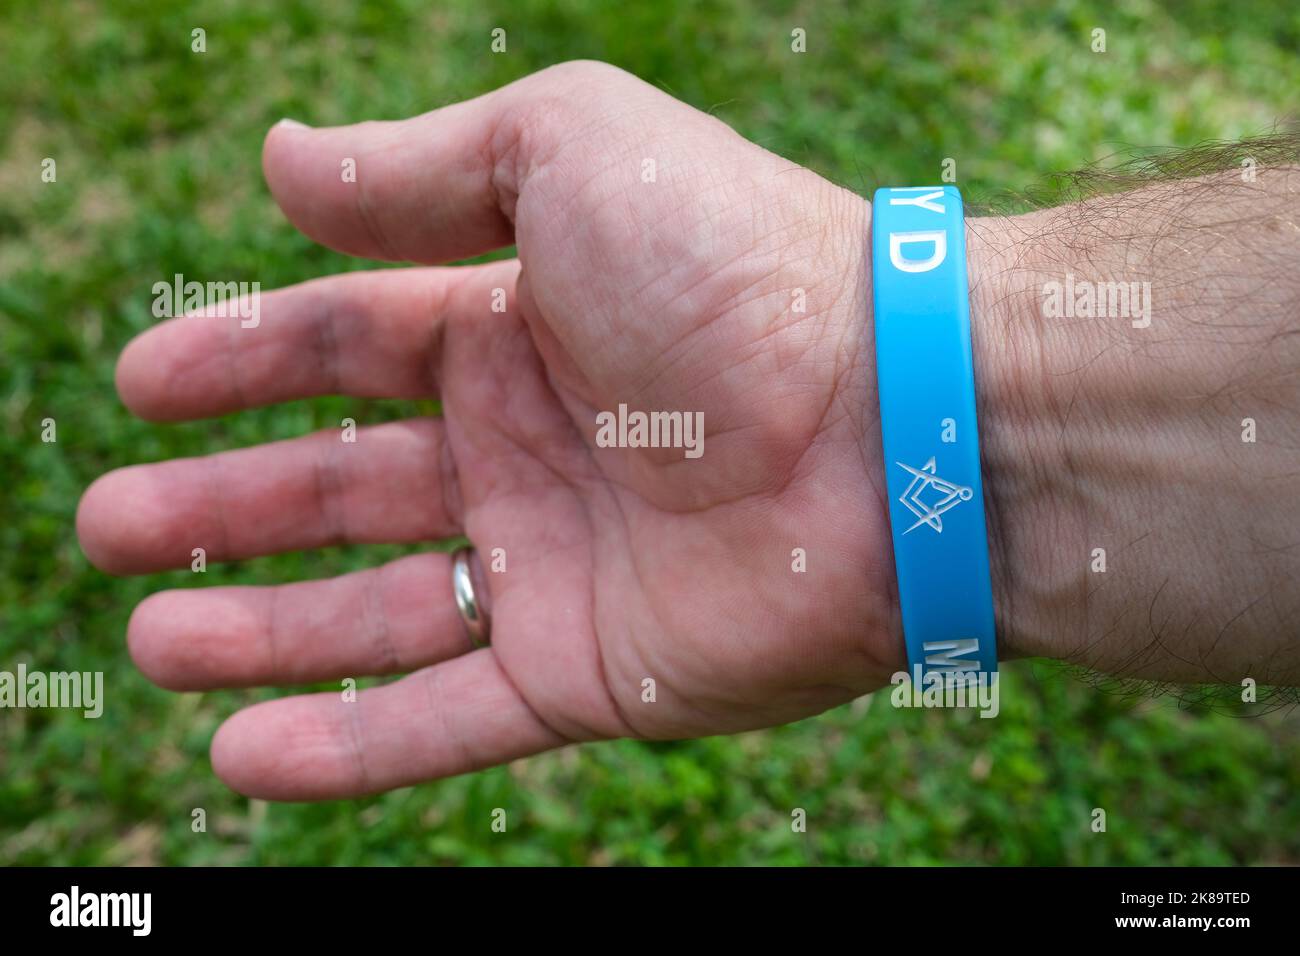 plastic wristband with a freemason square and compasses symbol Stock Photo